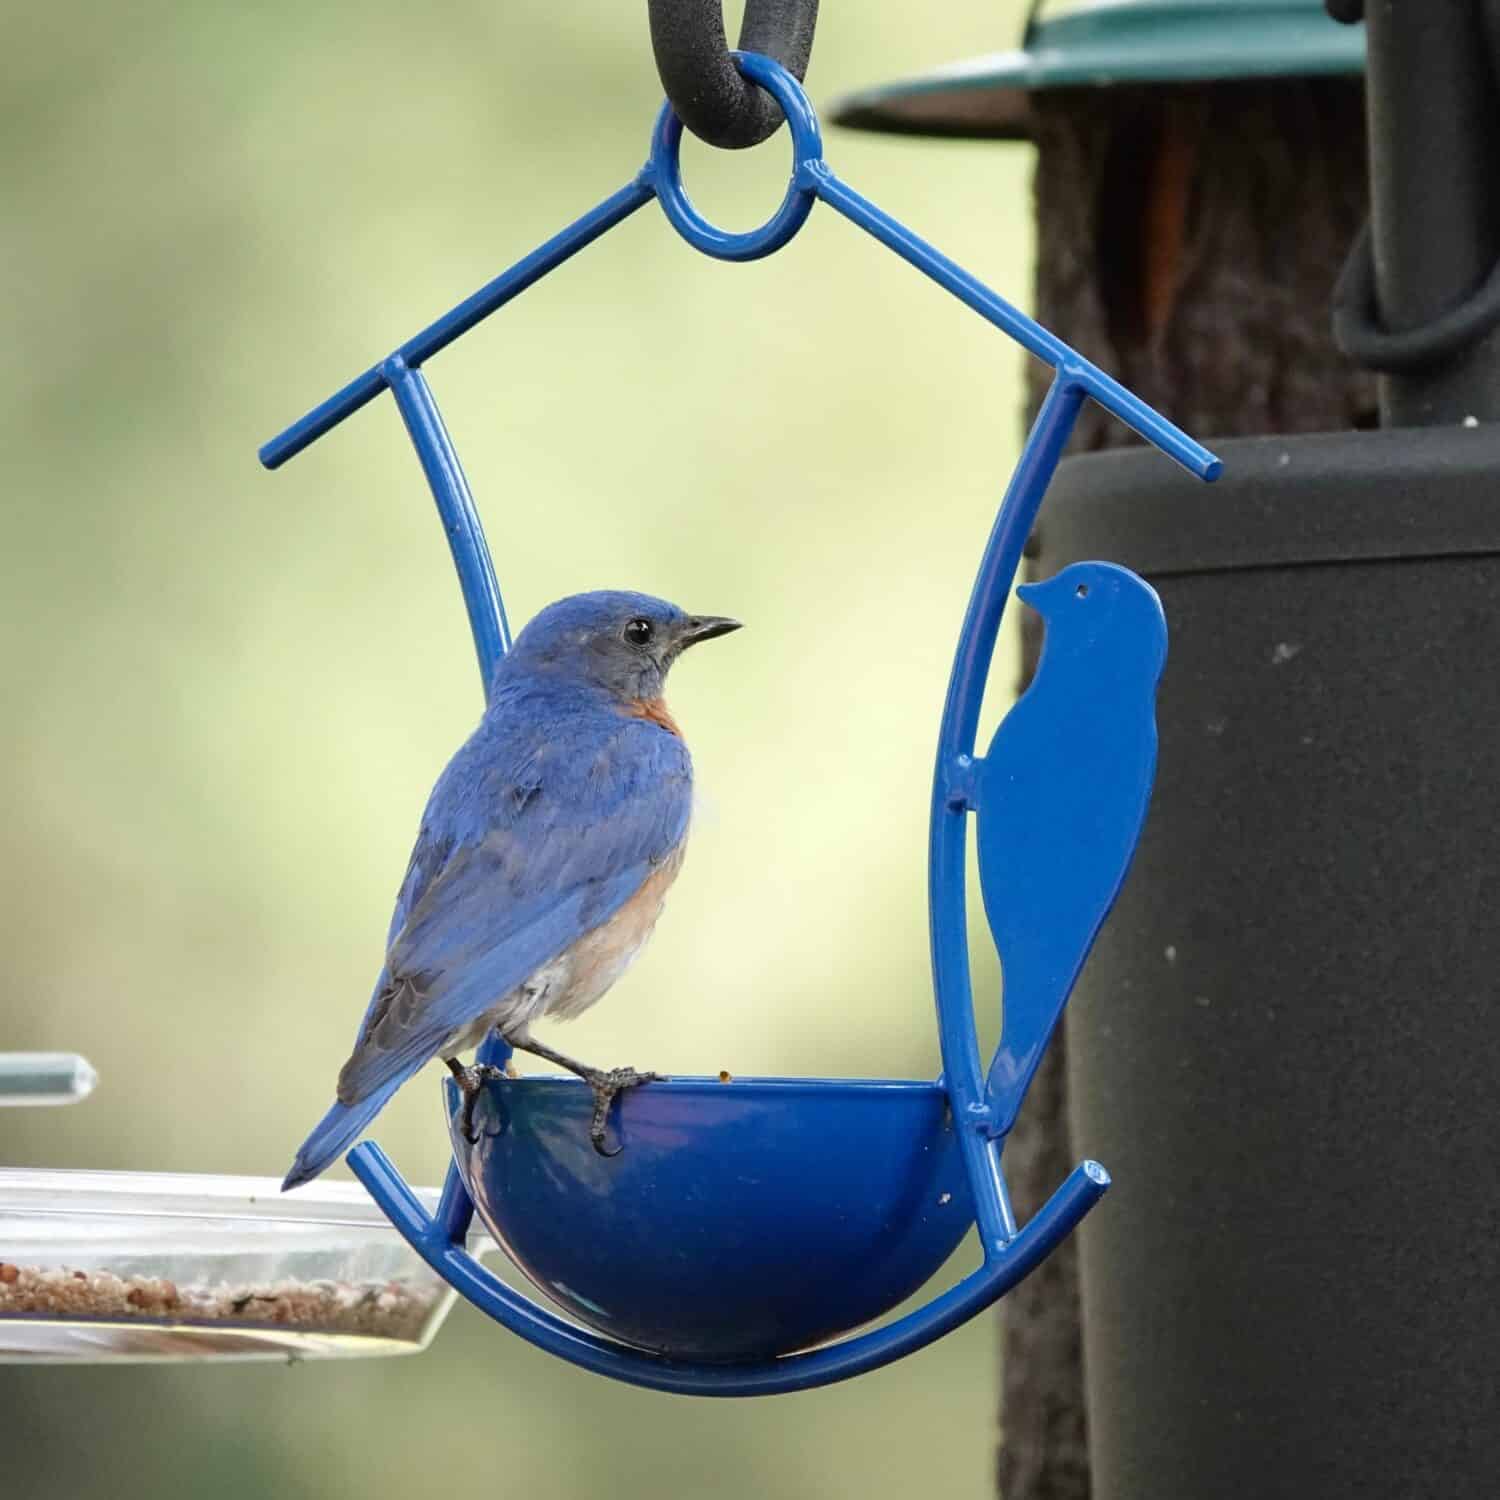                        Eastern Bluebird perched on the edge of a feeder mirroring a metal bluebird on Hilton Head Island.        